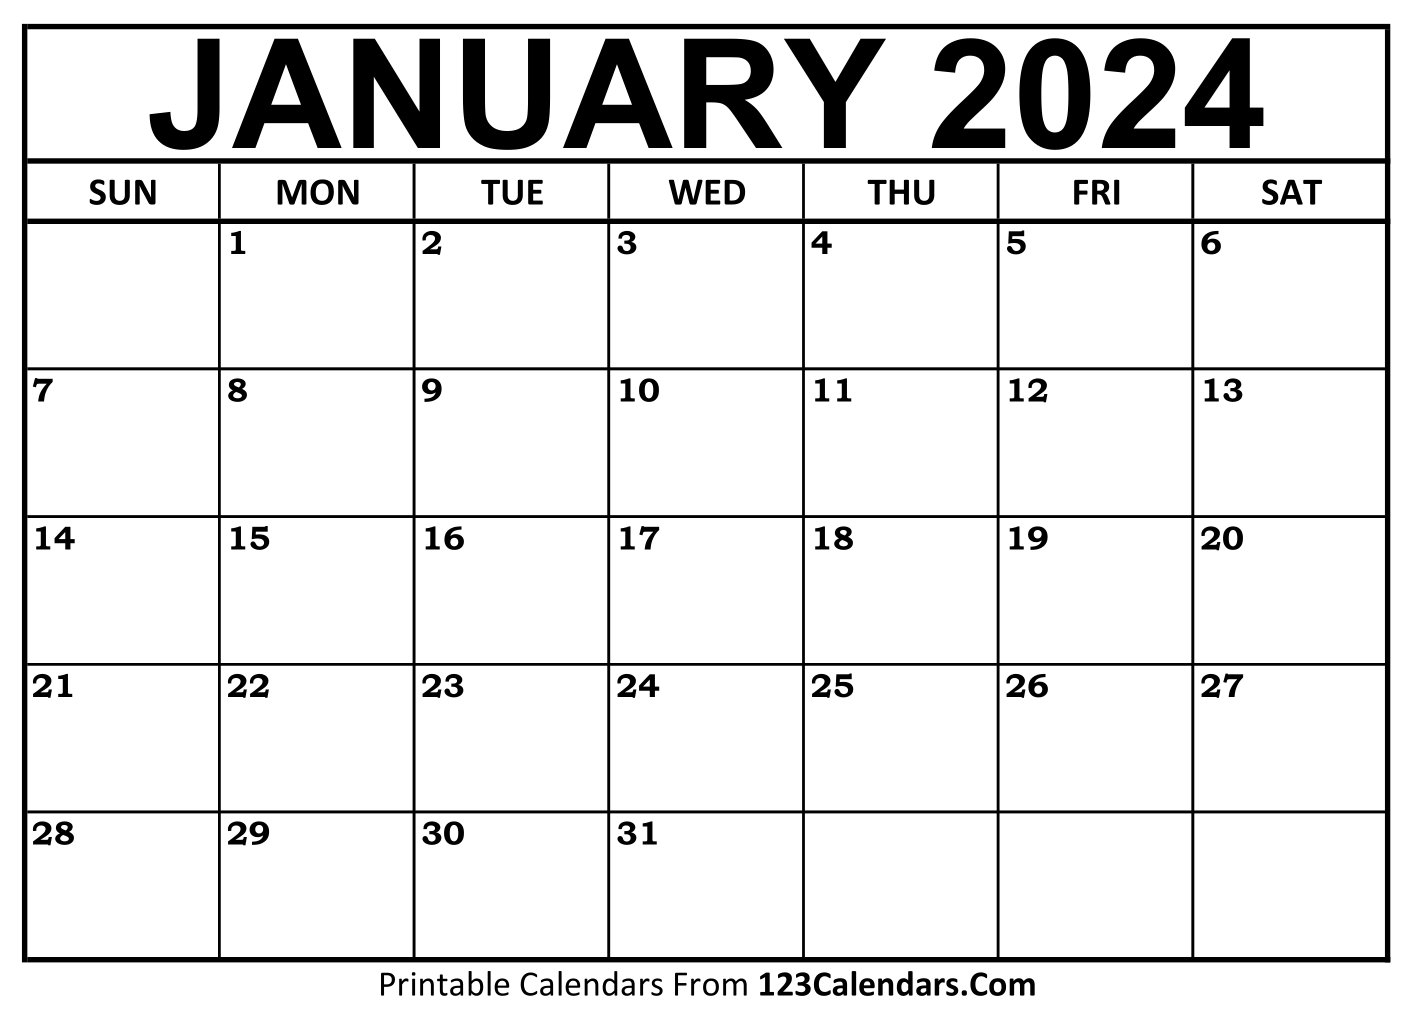 Printable January 2024 Calendar Templates - 123Calendars for 2024 Calendar Printable January